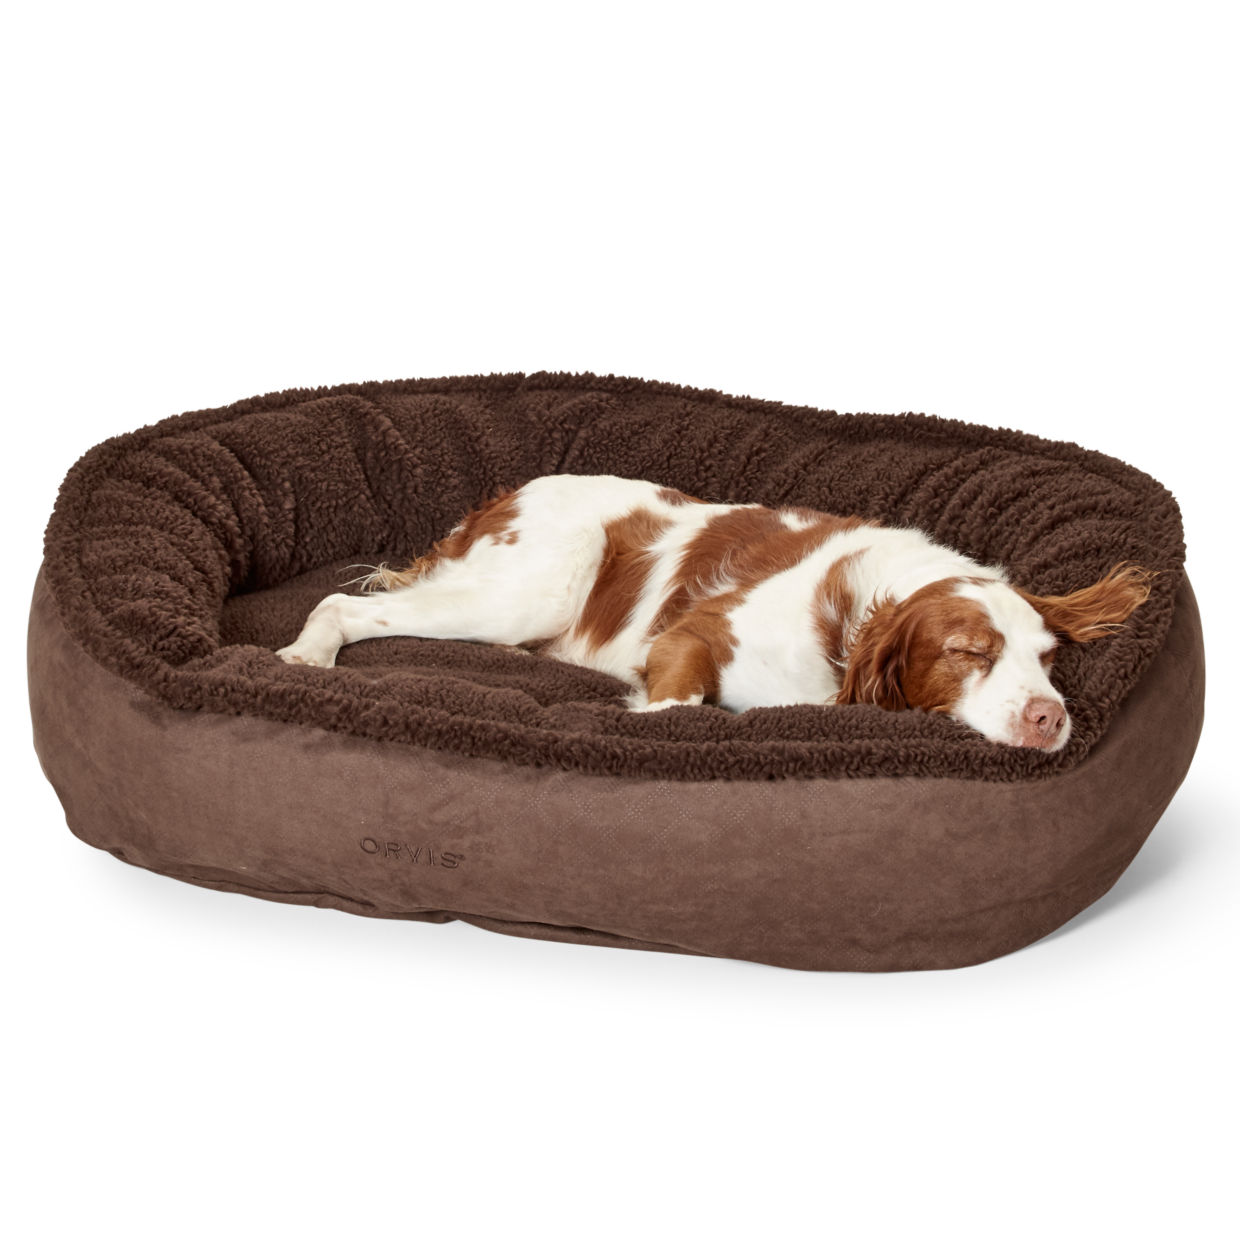 Orvis ComfortFill-Eco Wraparound Dog Bed with Fleece